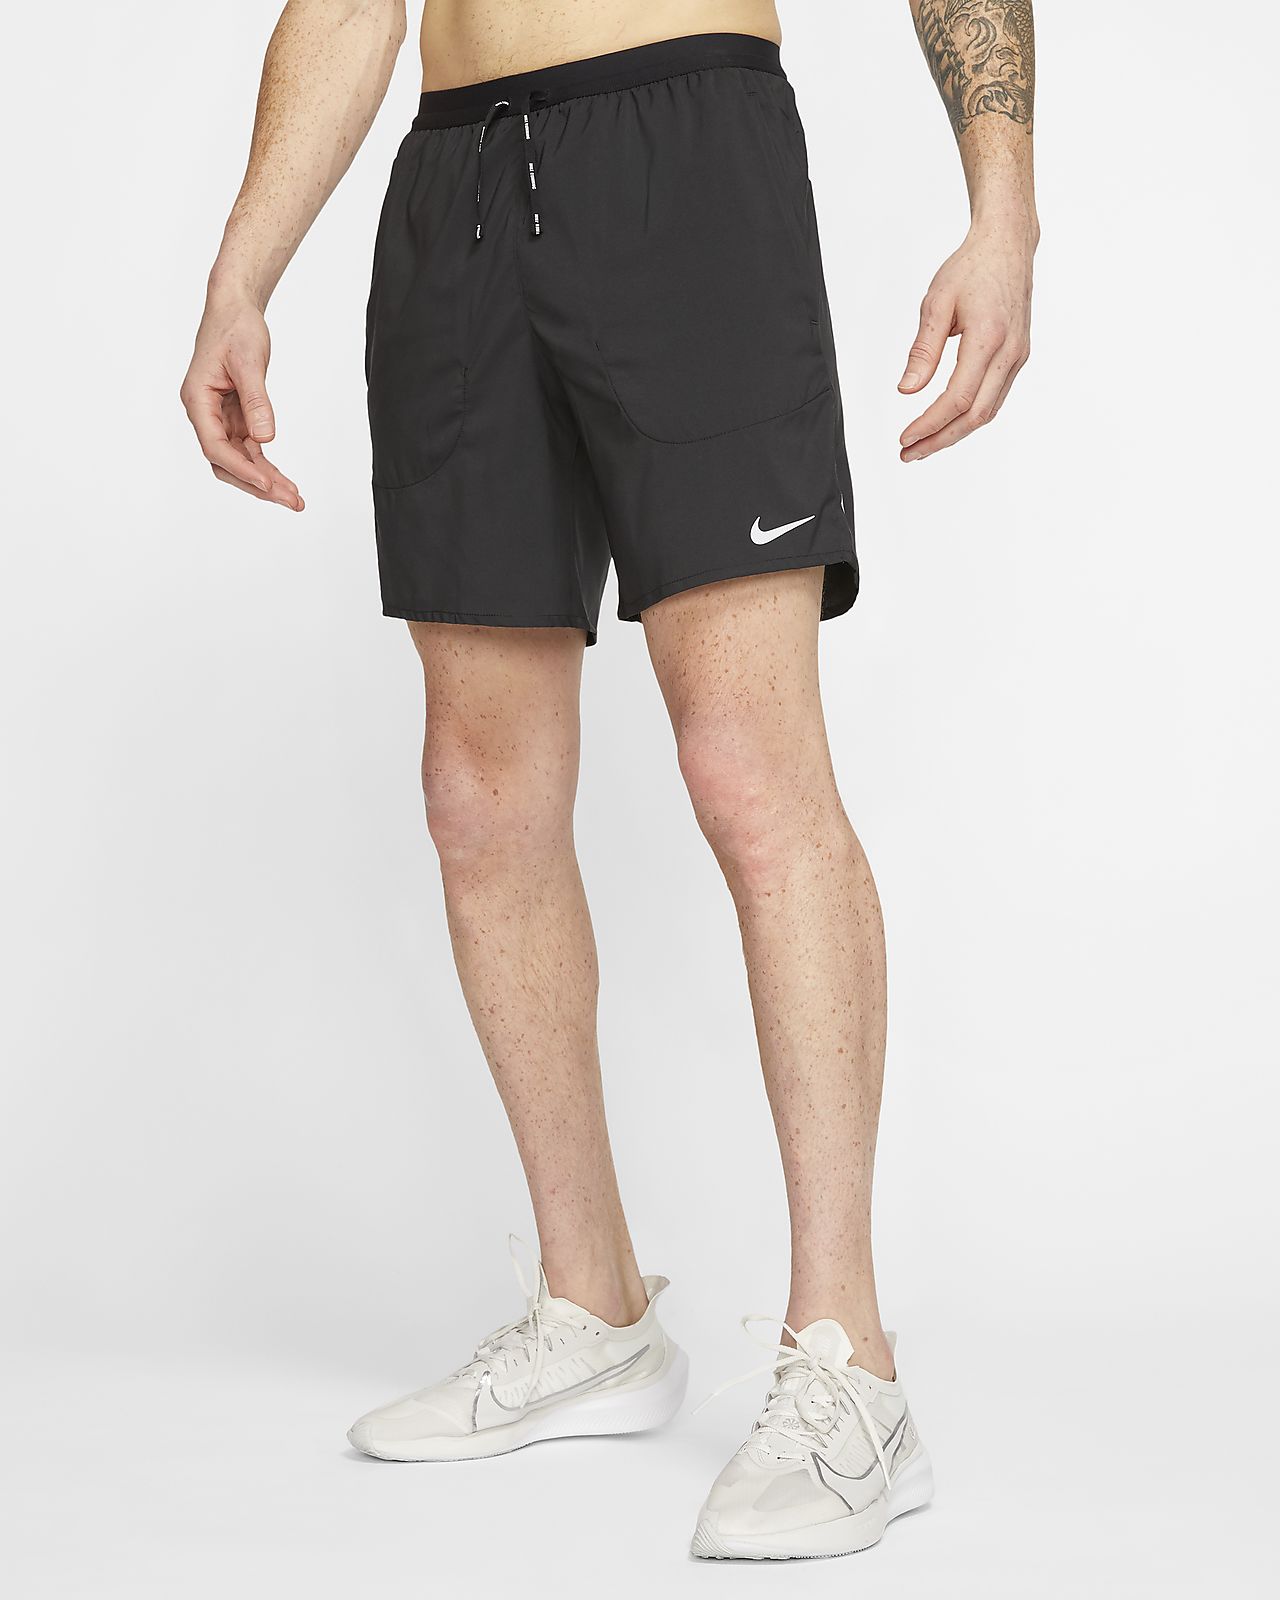 nike men's 7 inch running shorts Shop 